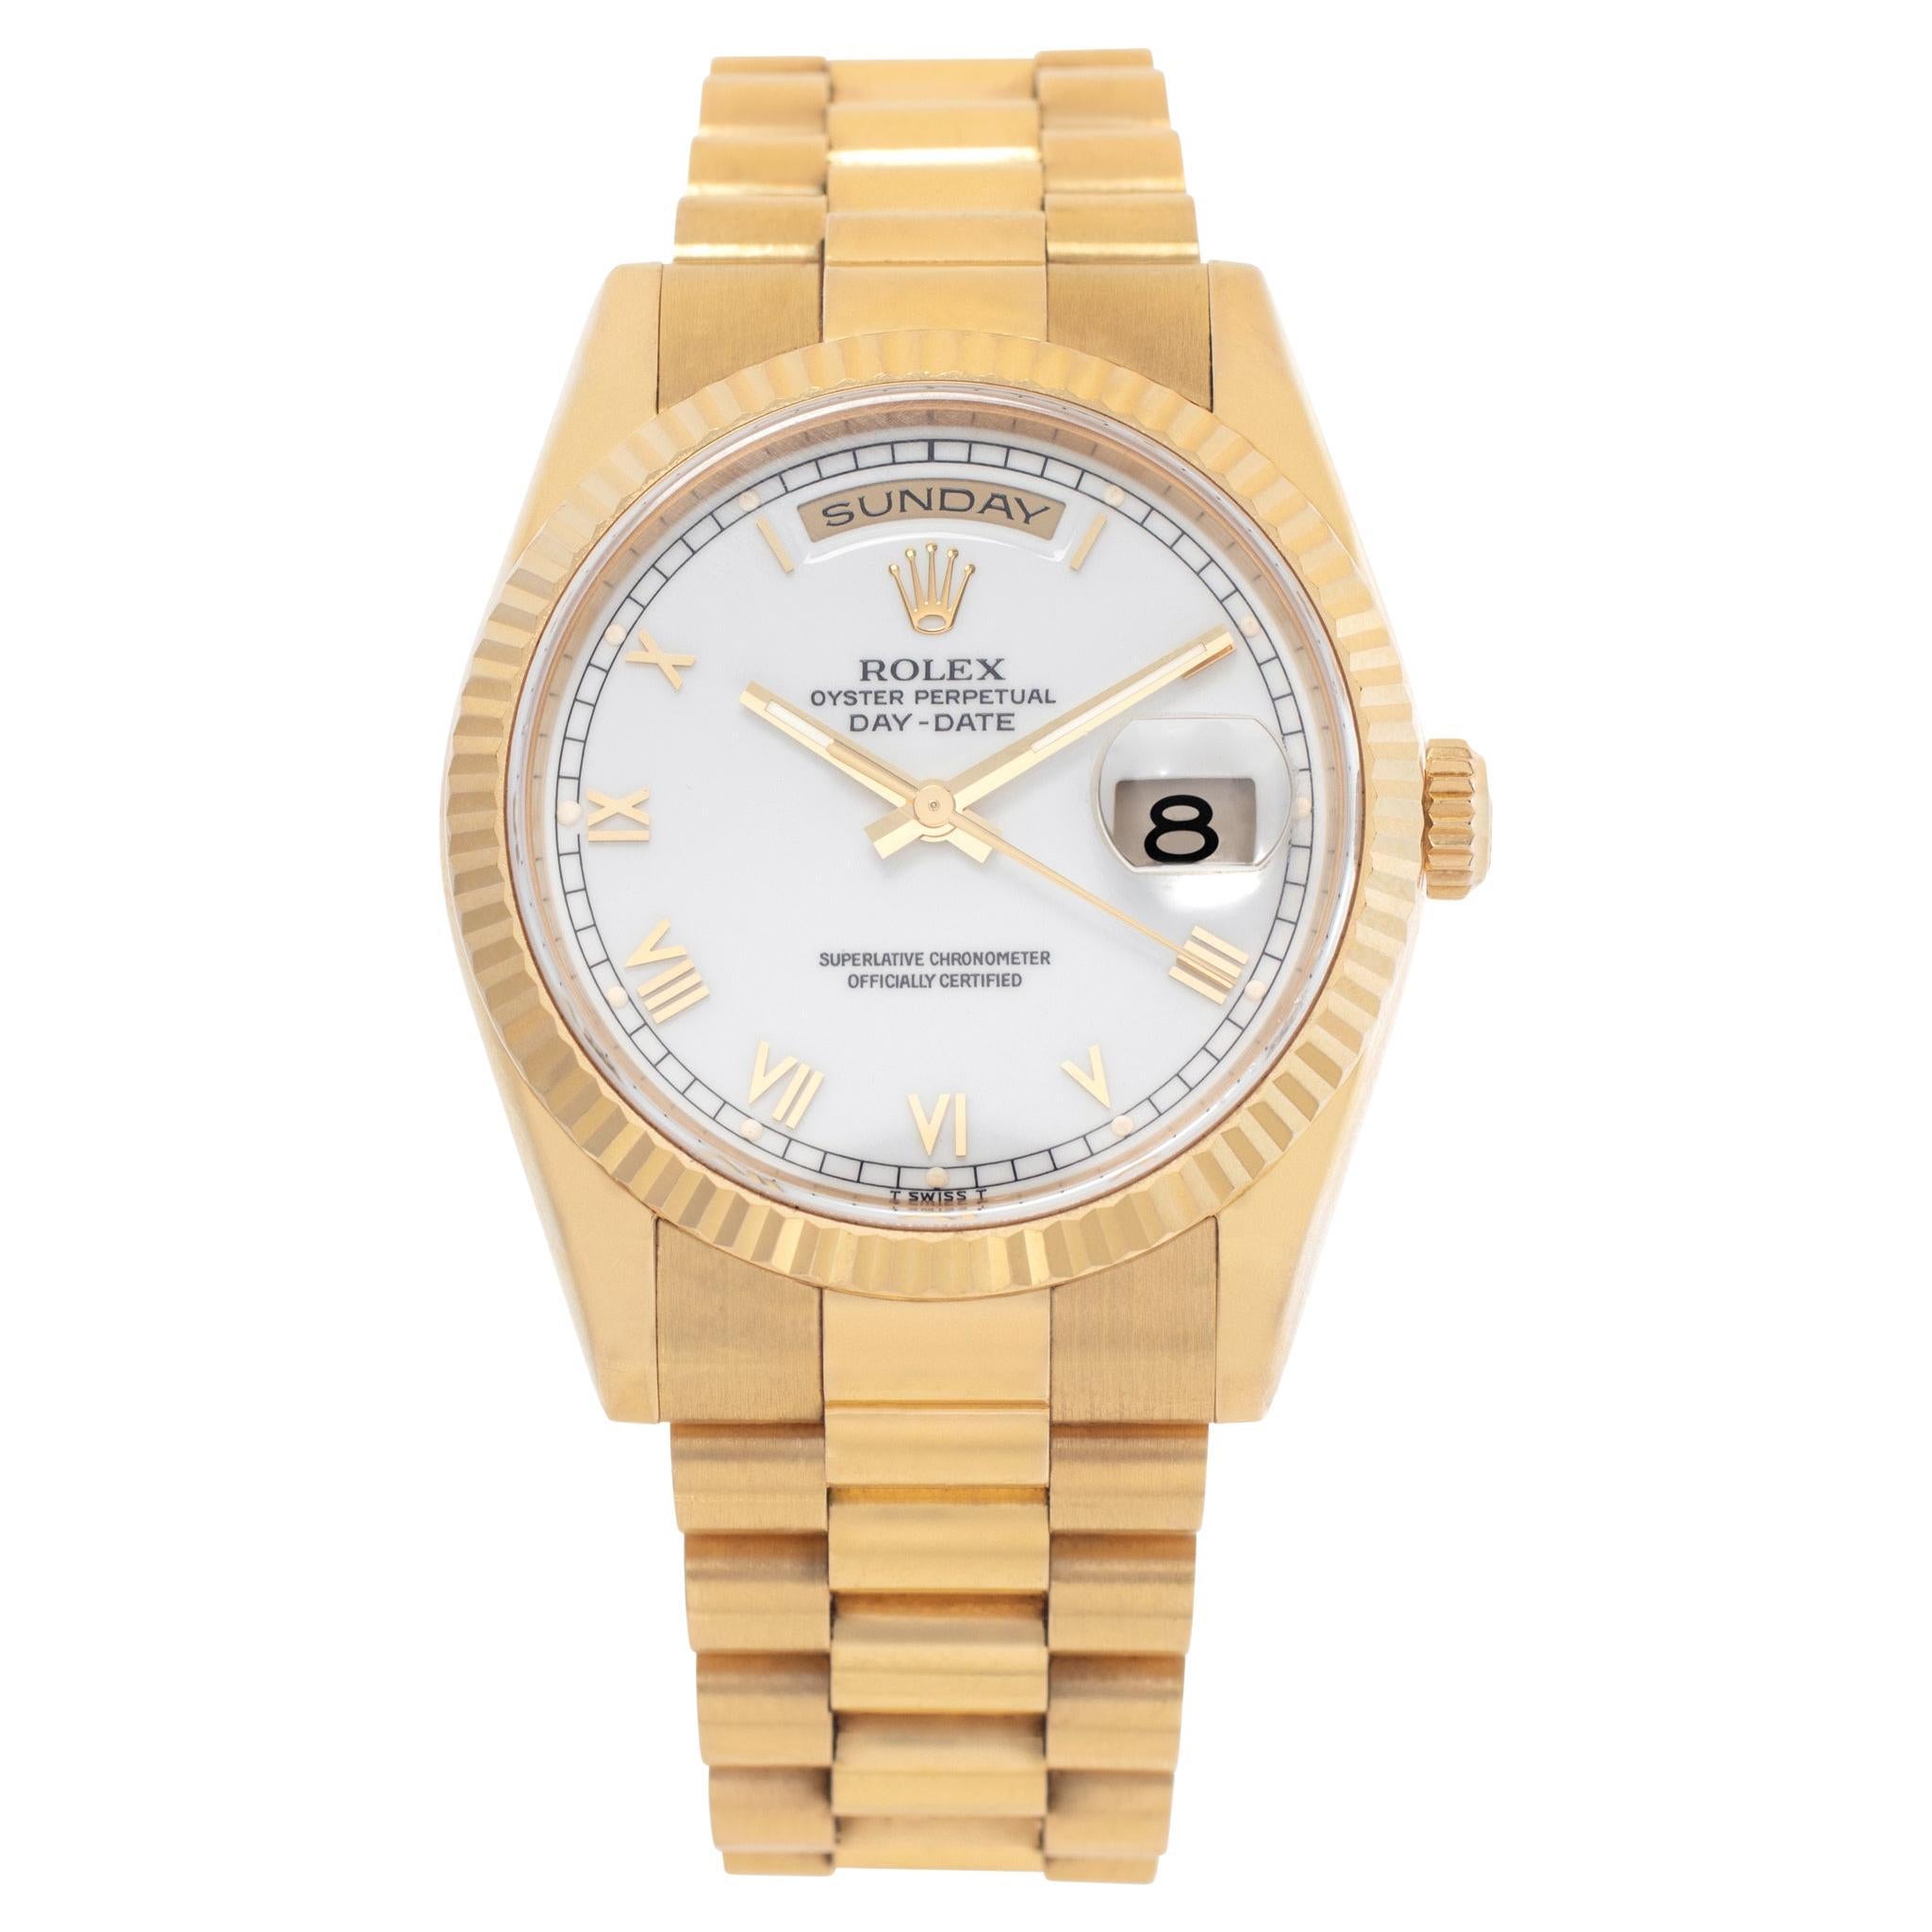 Rolex Day-Date 18k Yellow Gold Wristwatch Ref 118238